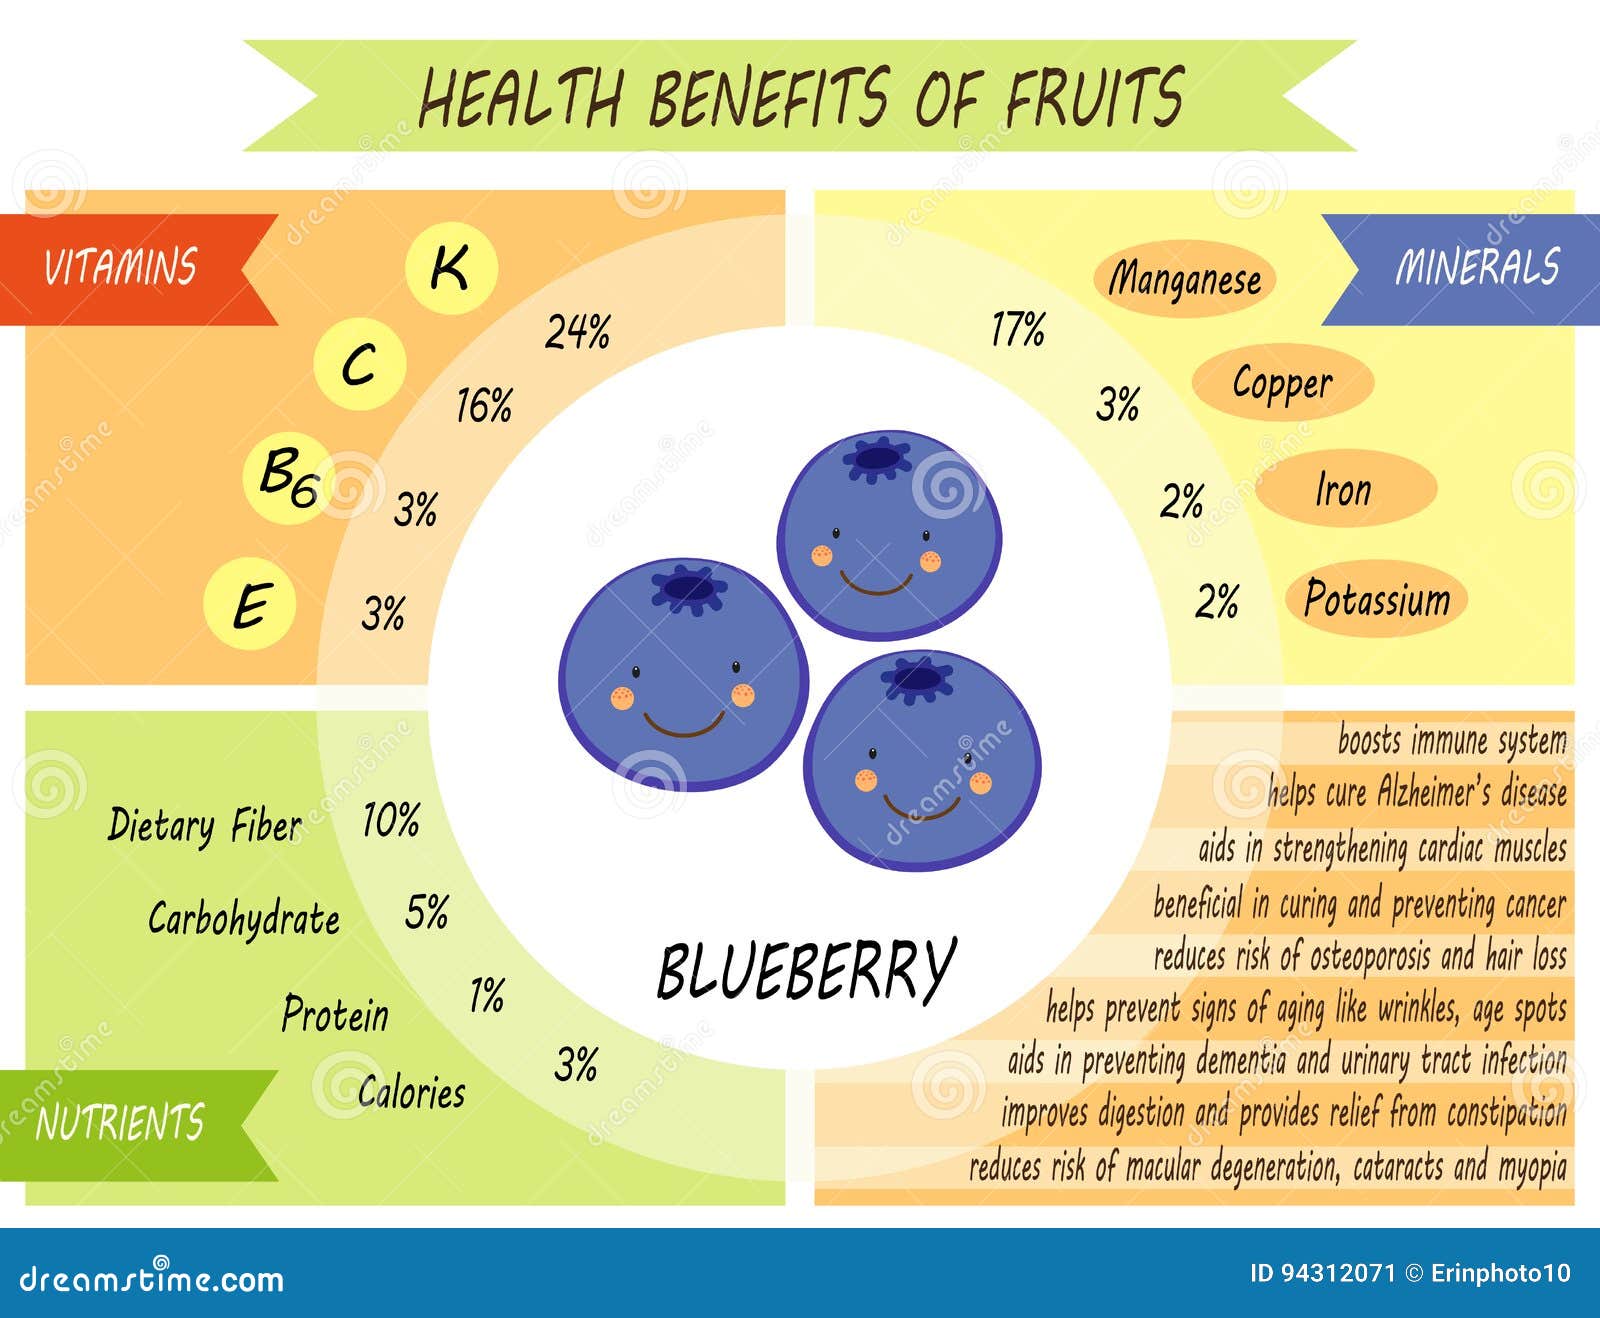 Benefits Of Fruits Chart